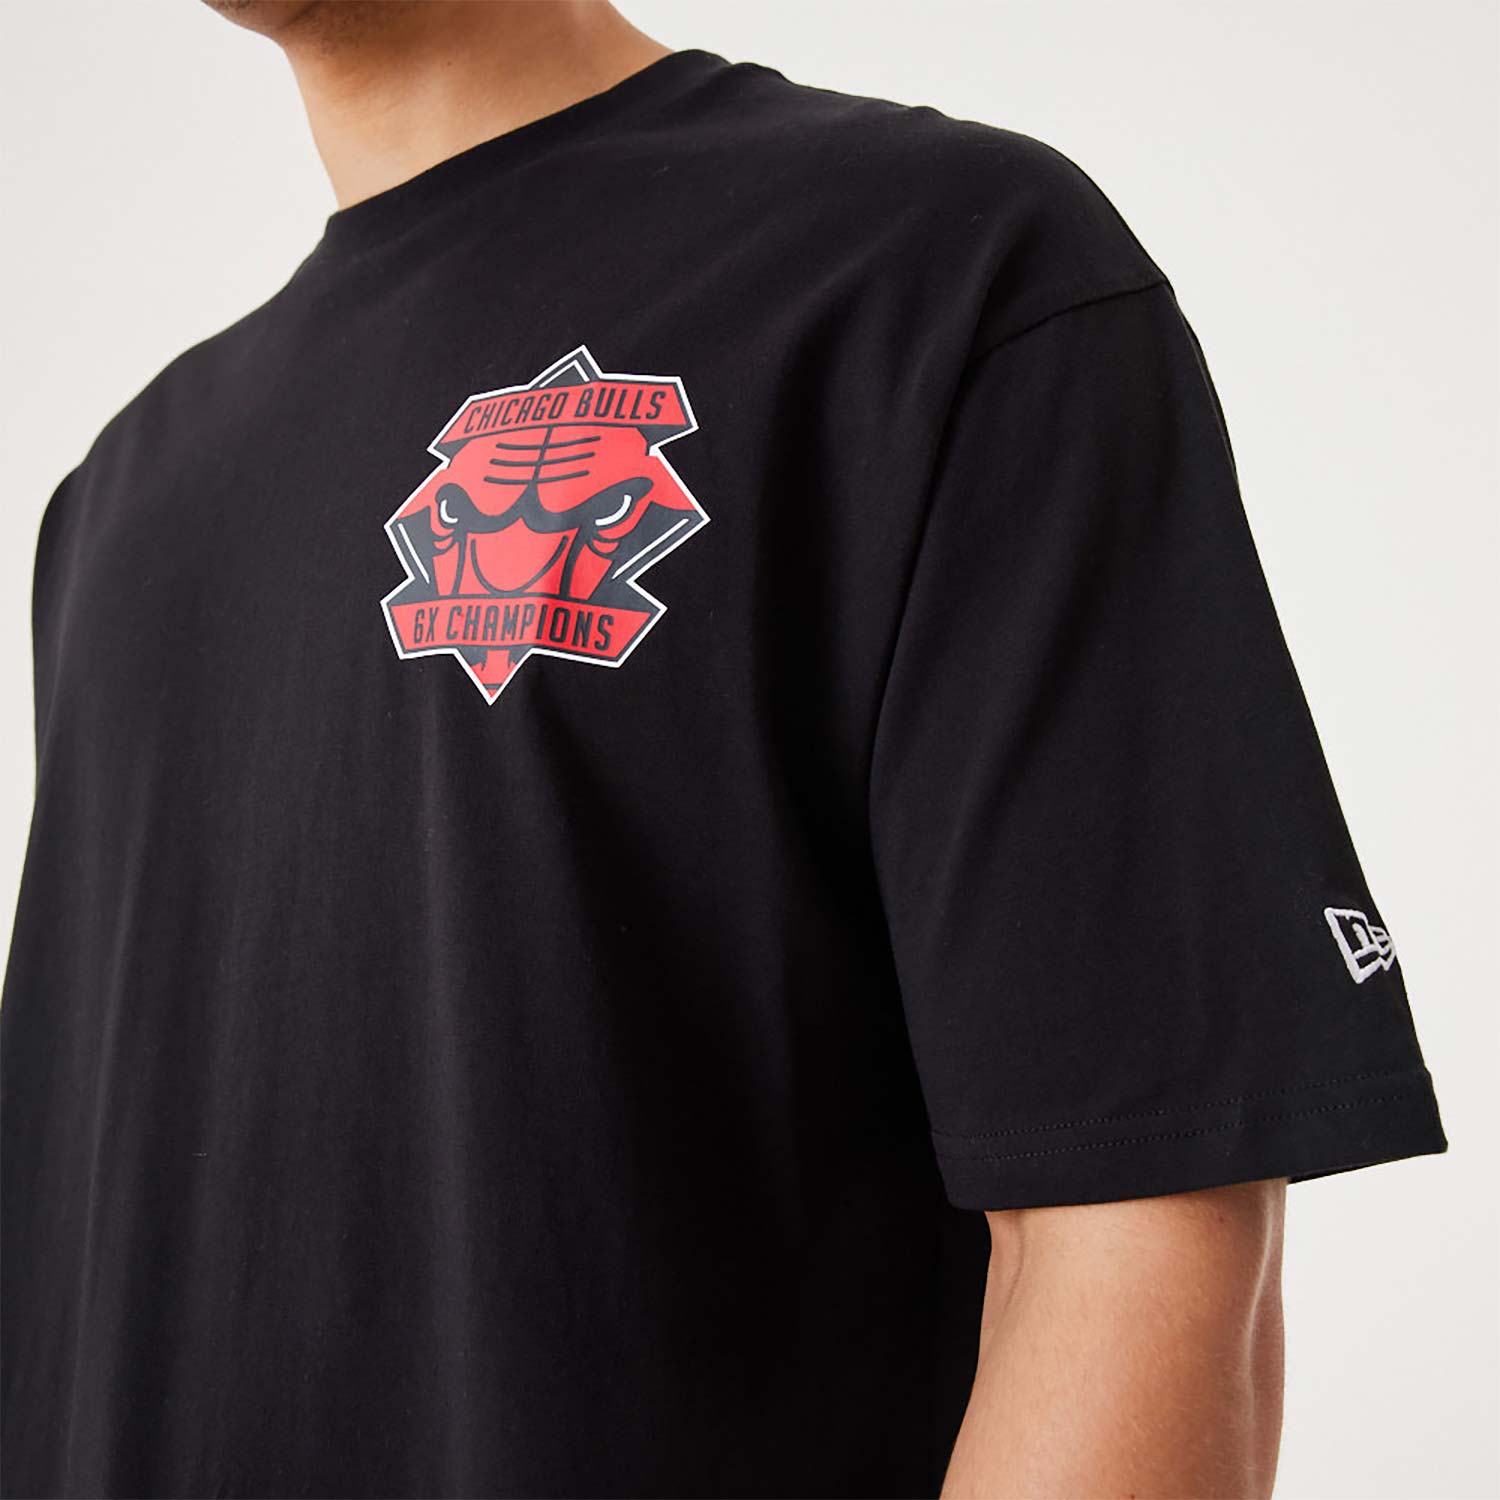 Chicago Bulls NBA Championship Black Oversized T-Shirt